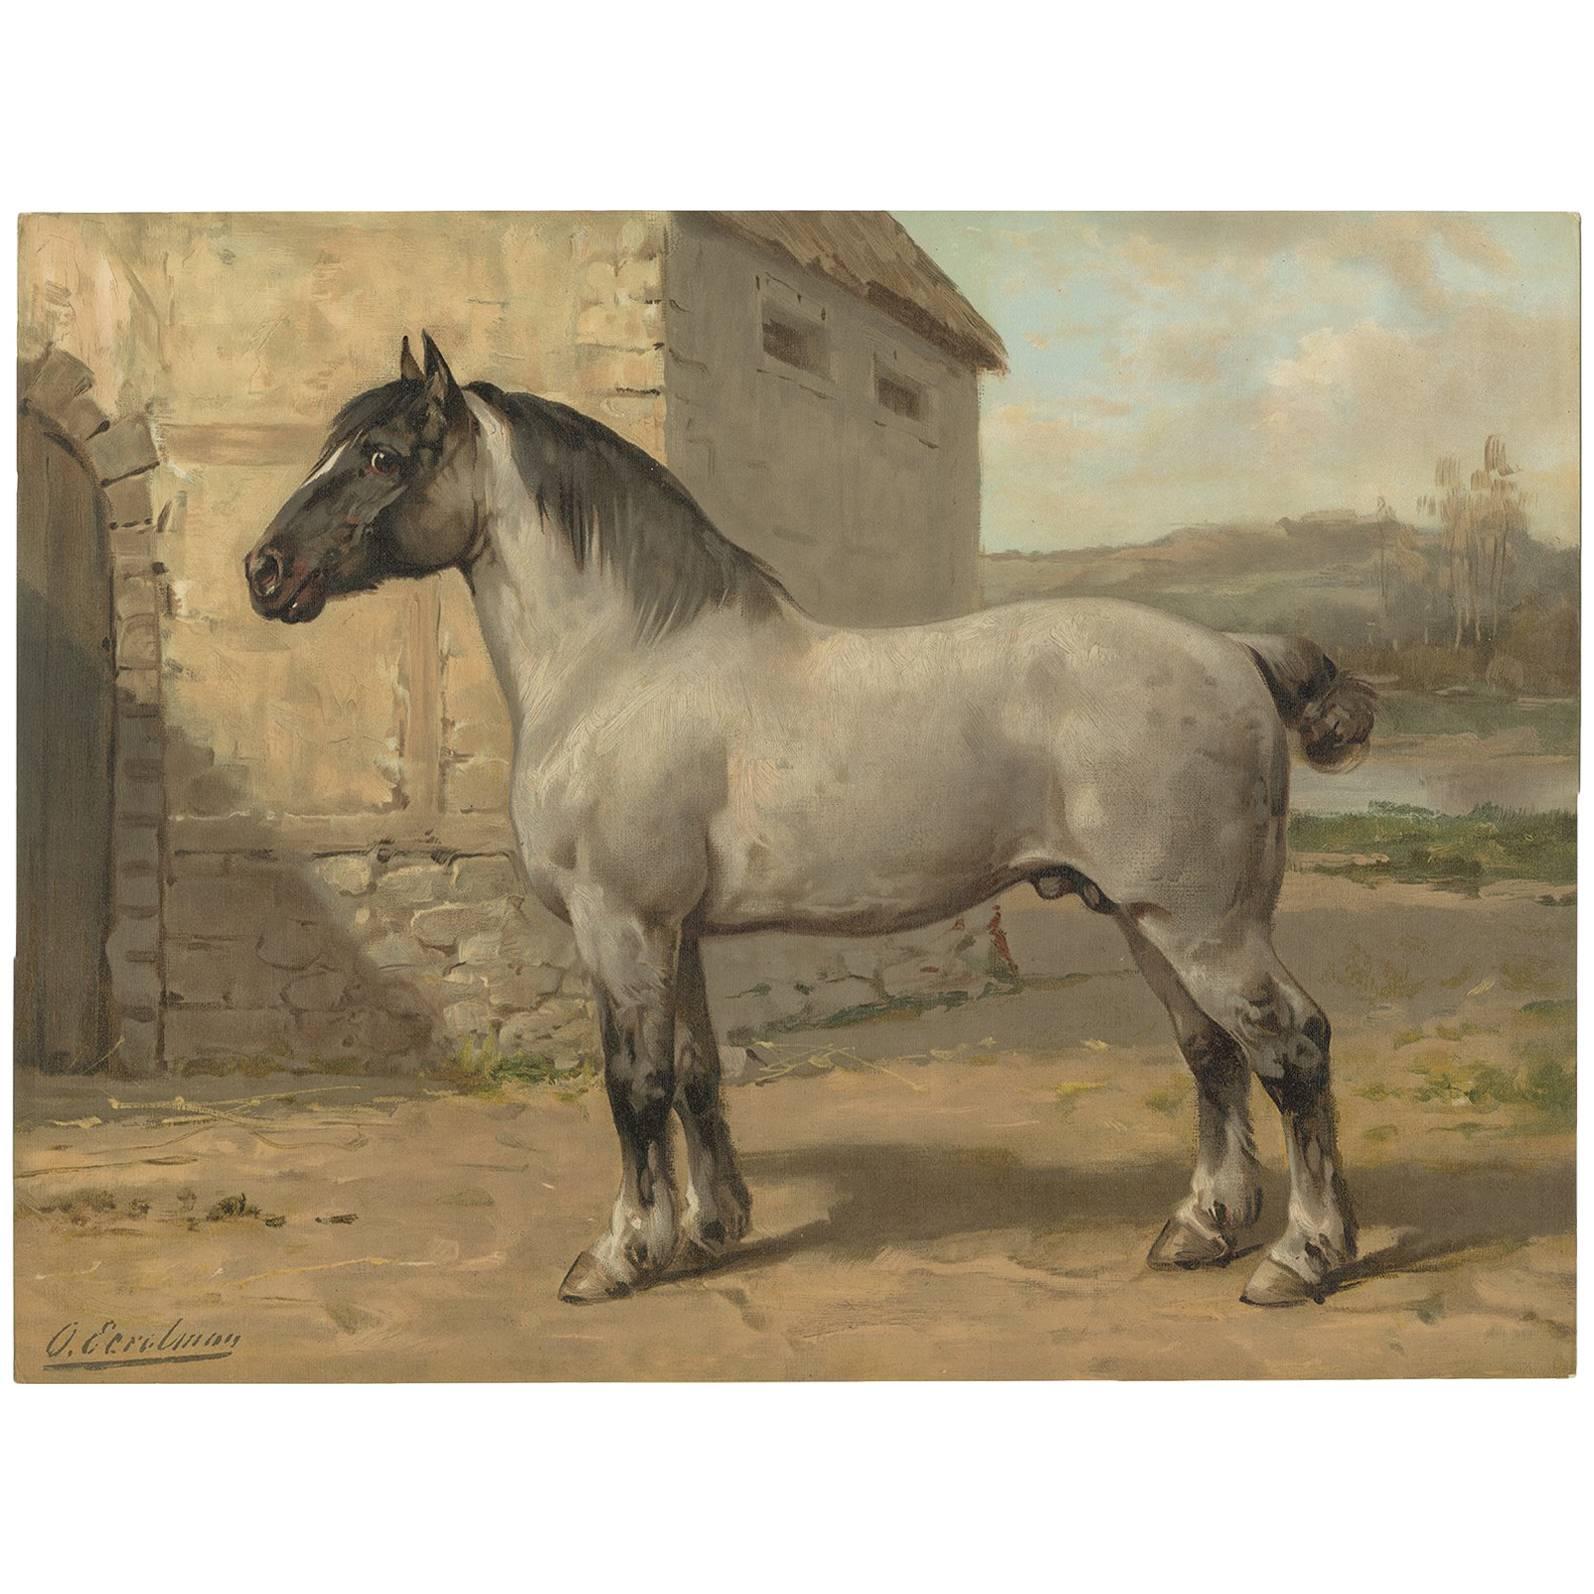 Antique Print of a Breton Horse by O. Eerelman, 1898